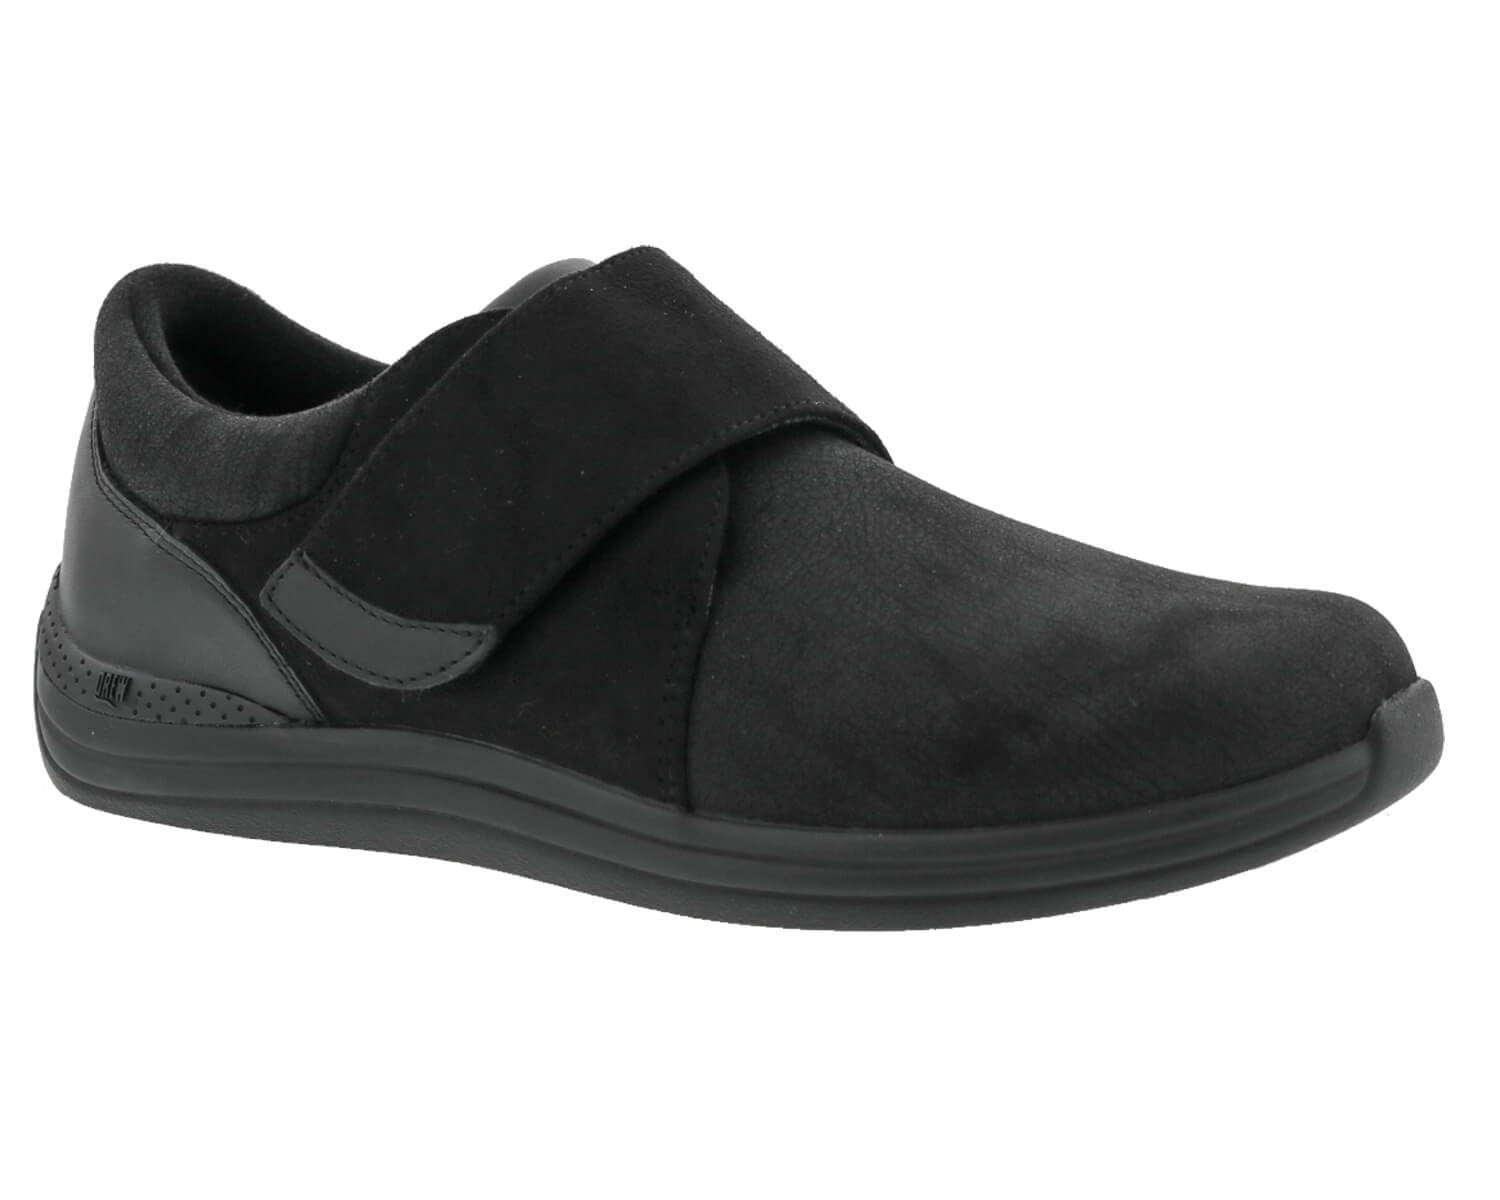 Drew Shoes Moonlite 14105 - Women's Casual Shoe - Comfort Orthopedic Diabetic Casual Shoe - Extra Depth - Extra Wide